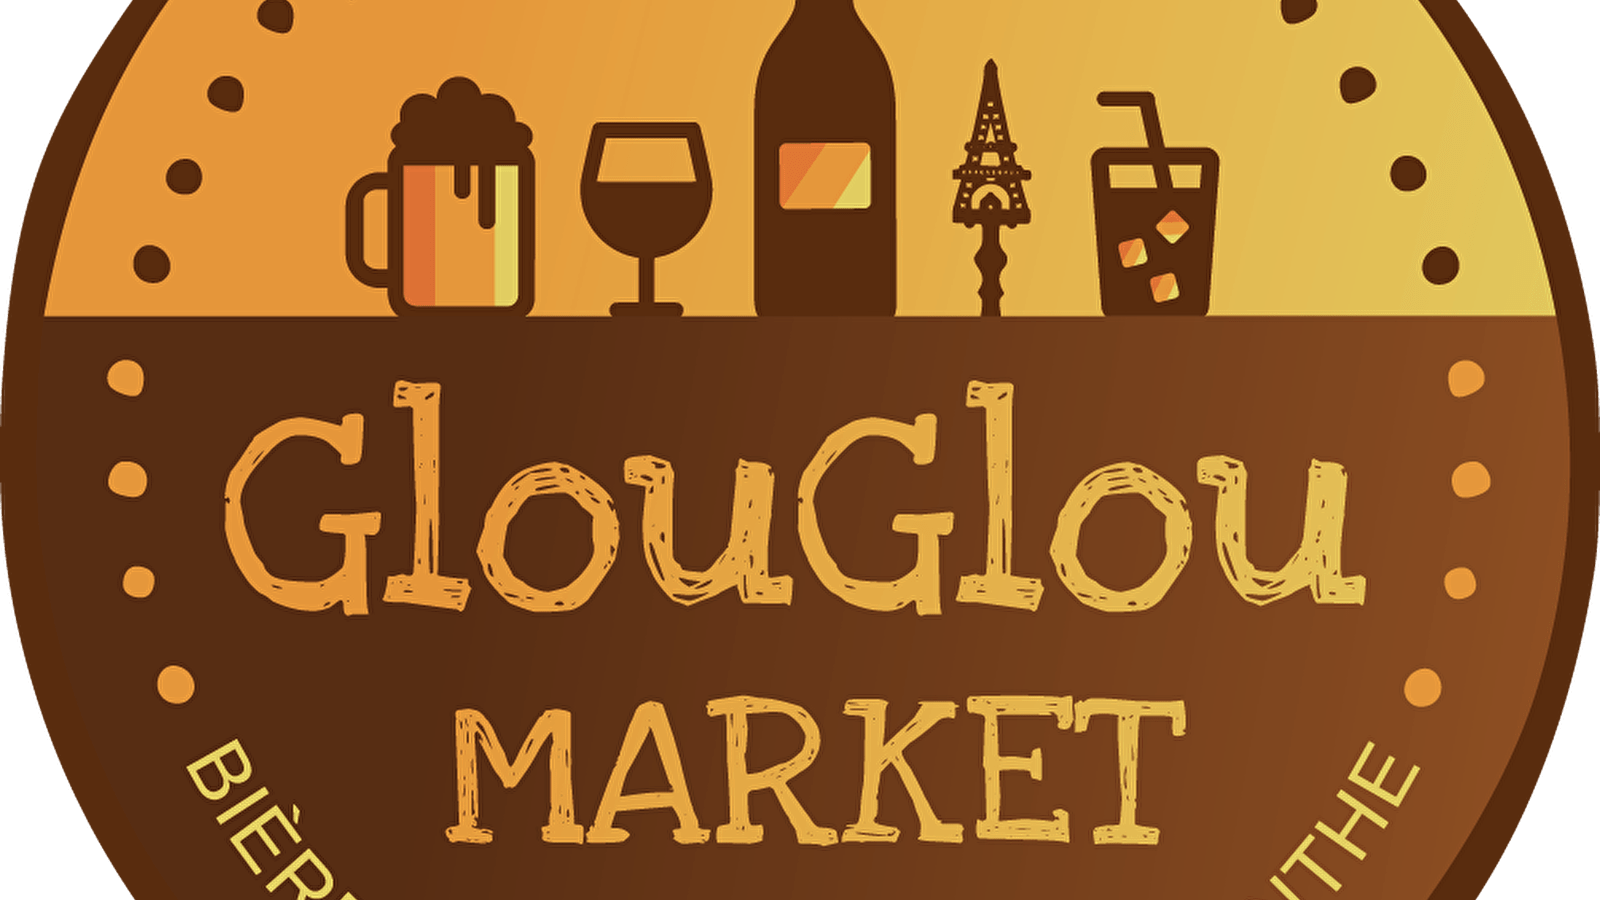 Glouglou Market